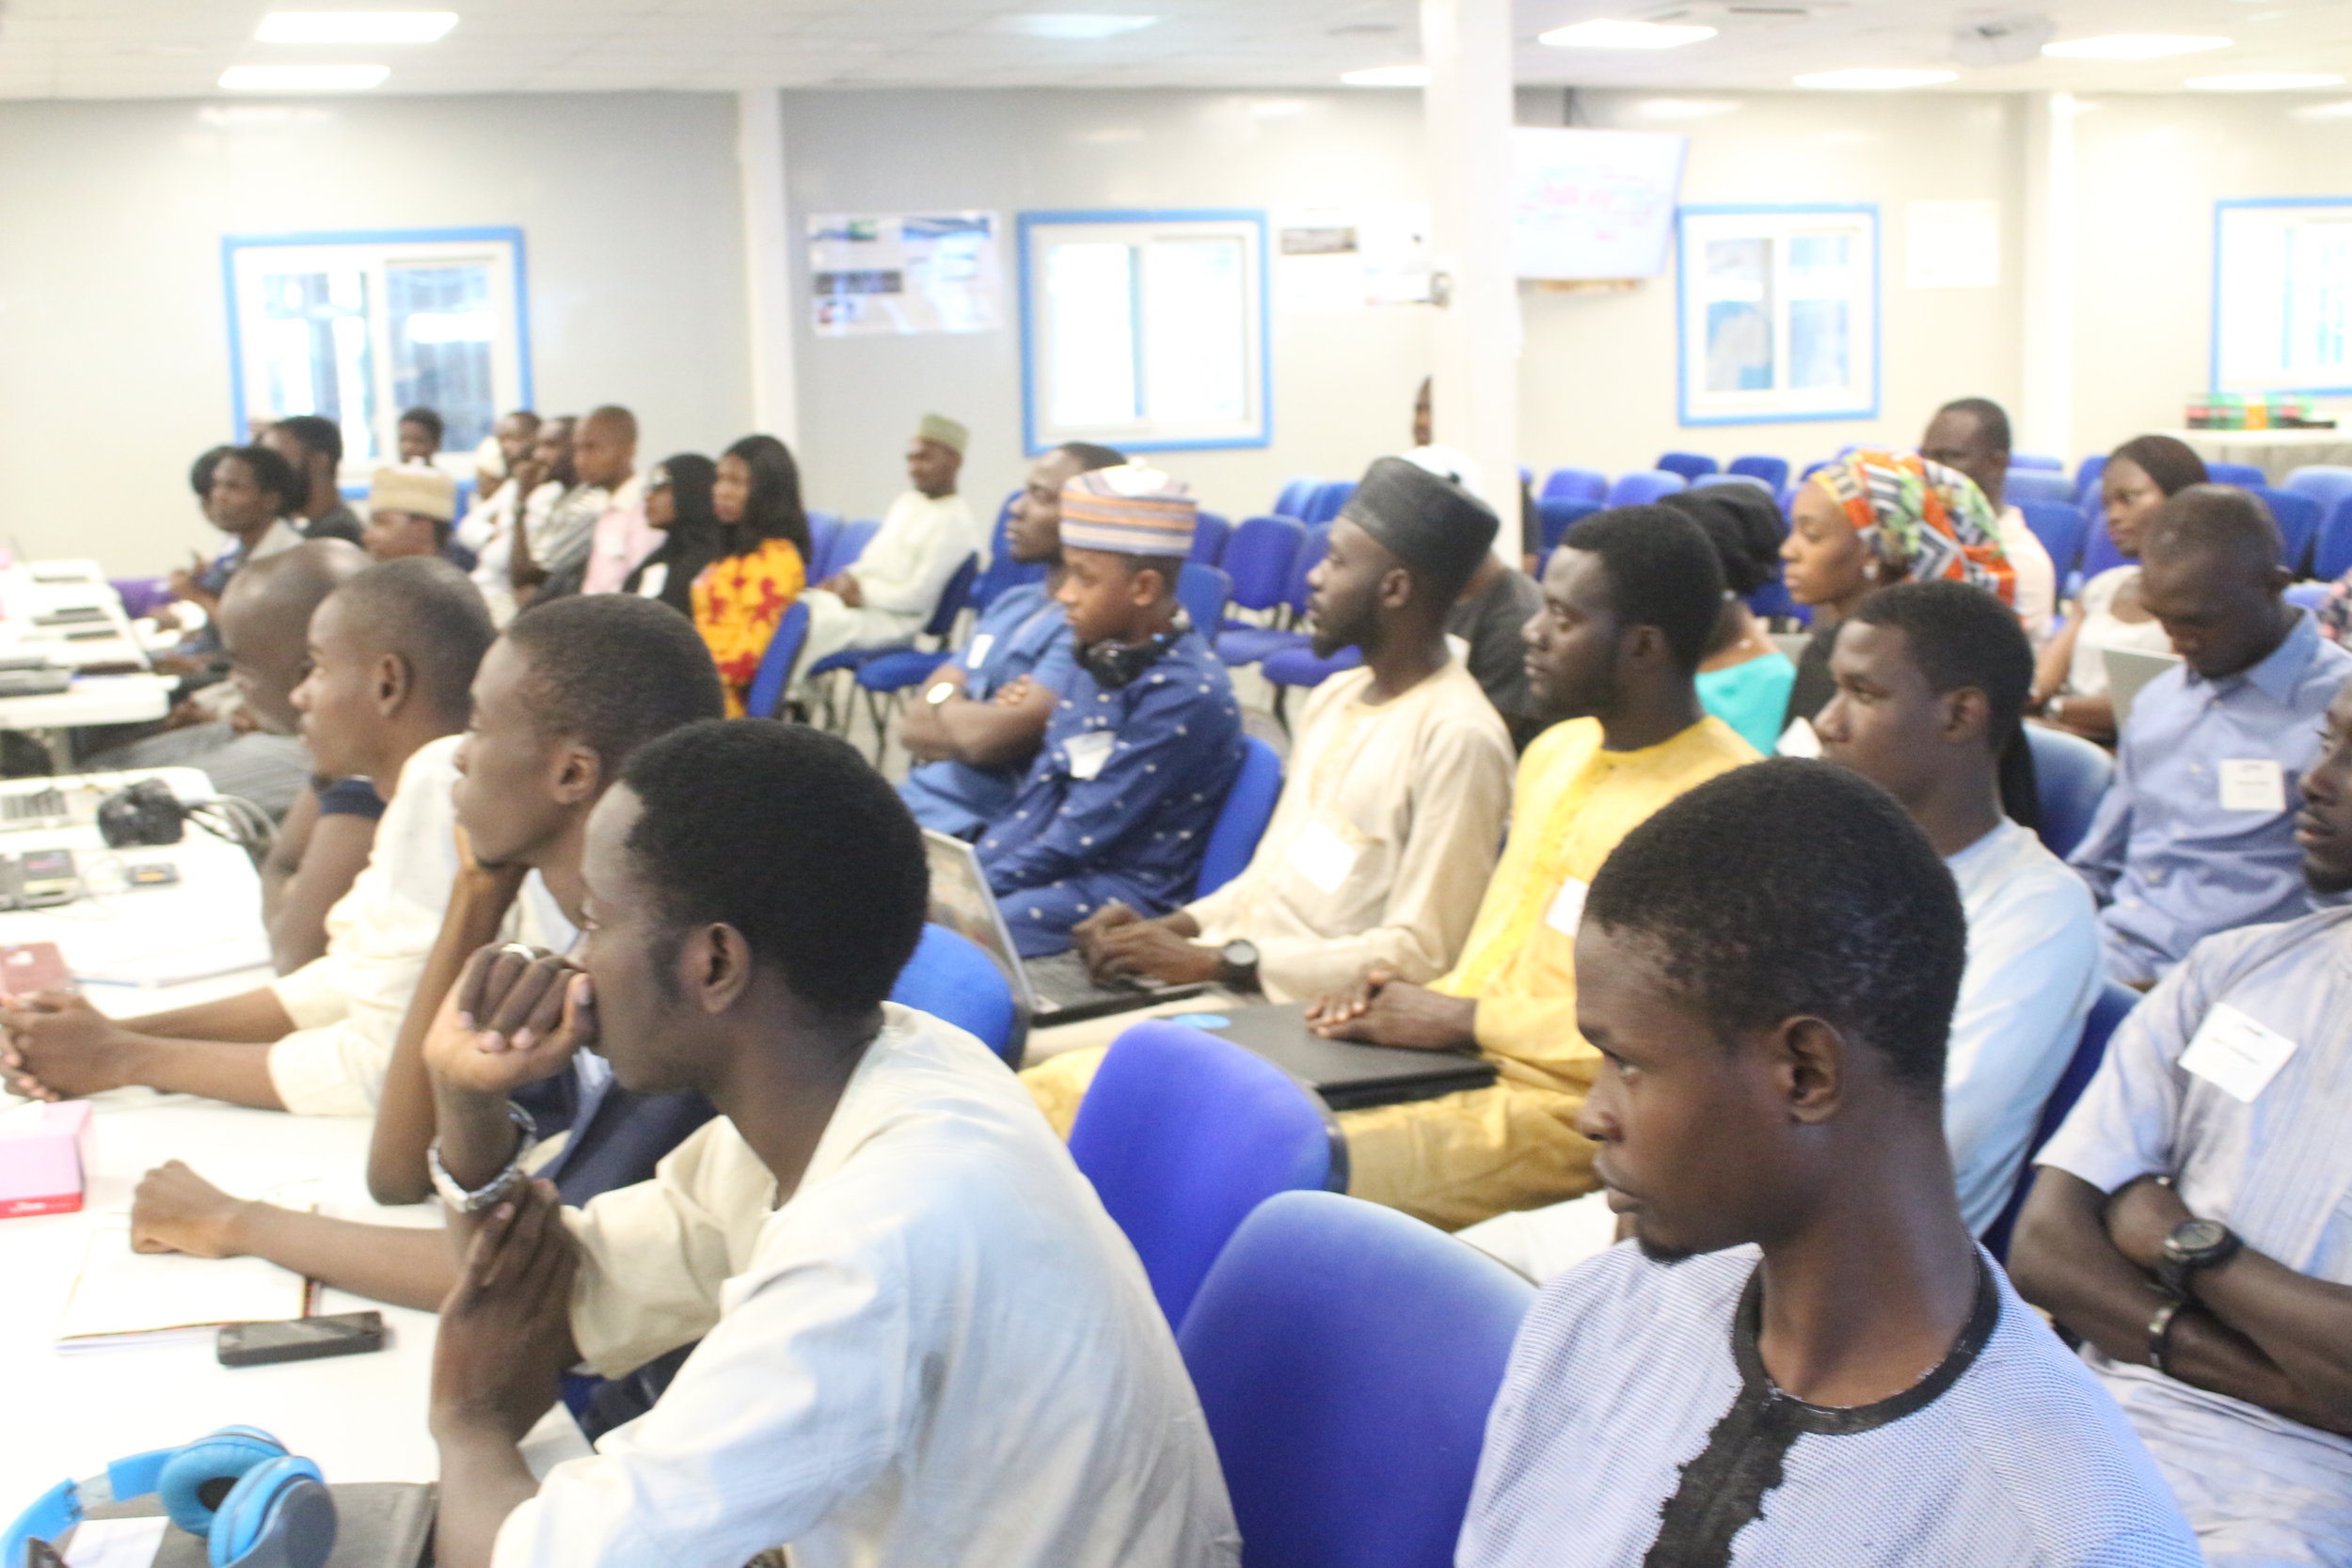     Over 40 participants from Bayero University, Kano State University and other parts of Kano State attended the meetup    